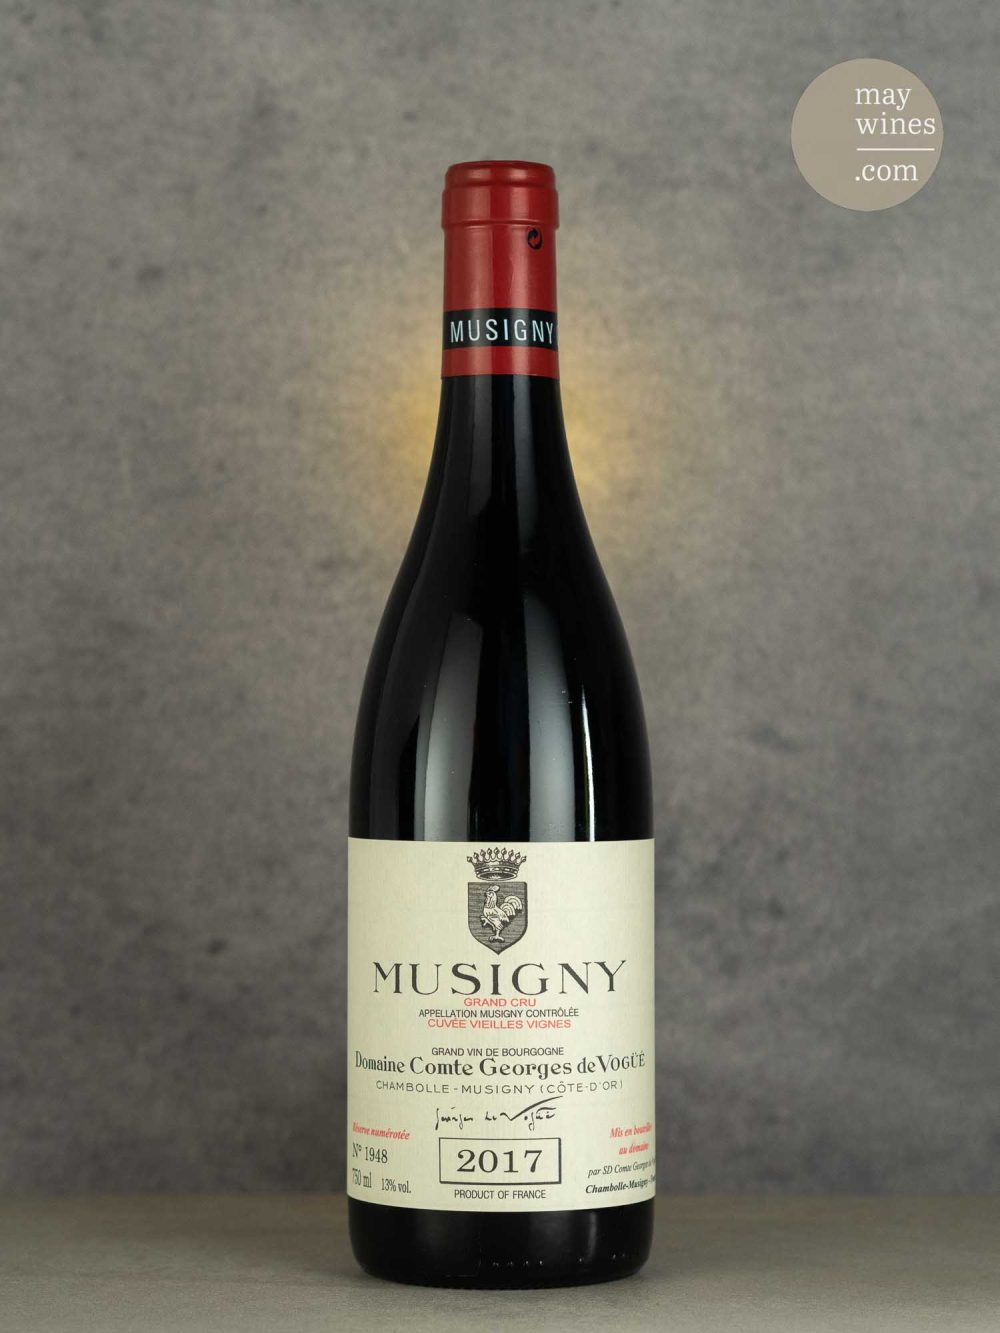 May Wines – Rotwein – 2017 Musigny V. V. Grand Cru - Domaine Comte Georges de Vogüé